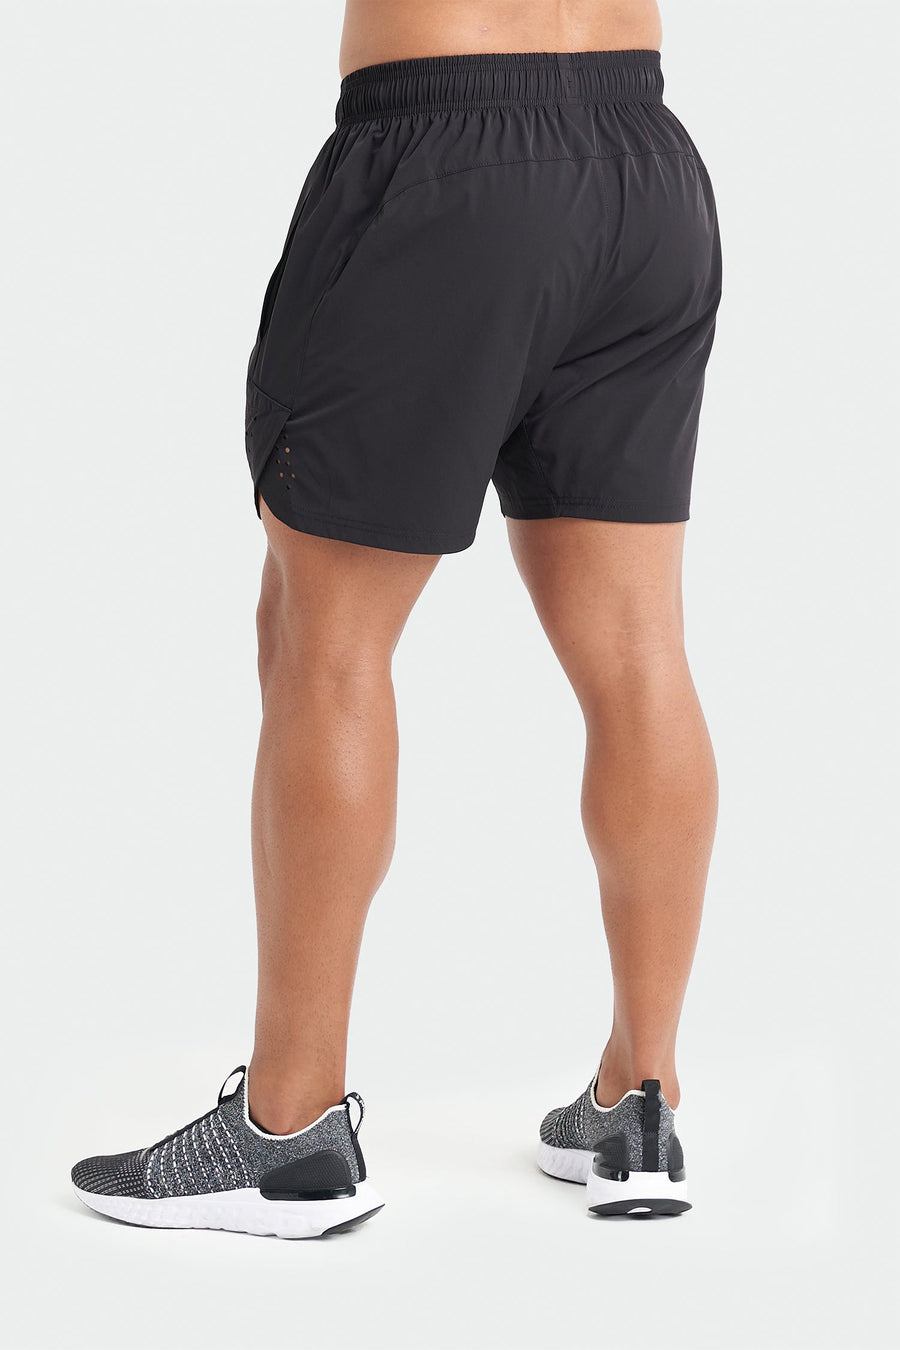 TLF Element 5” Shorts - Men’s 5 Inch inseam Shorts - Black - 2